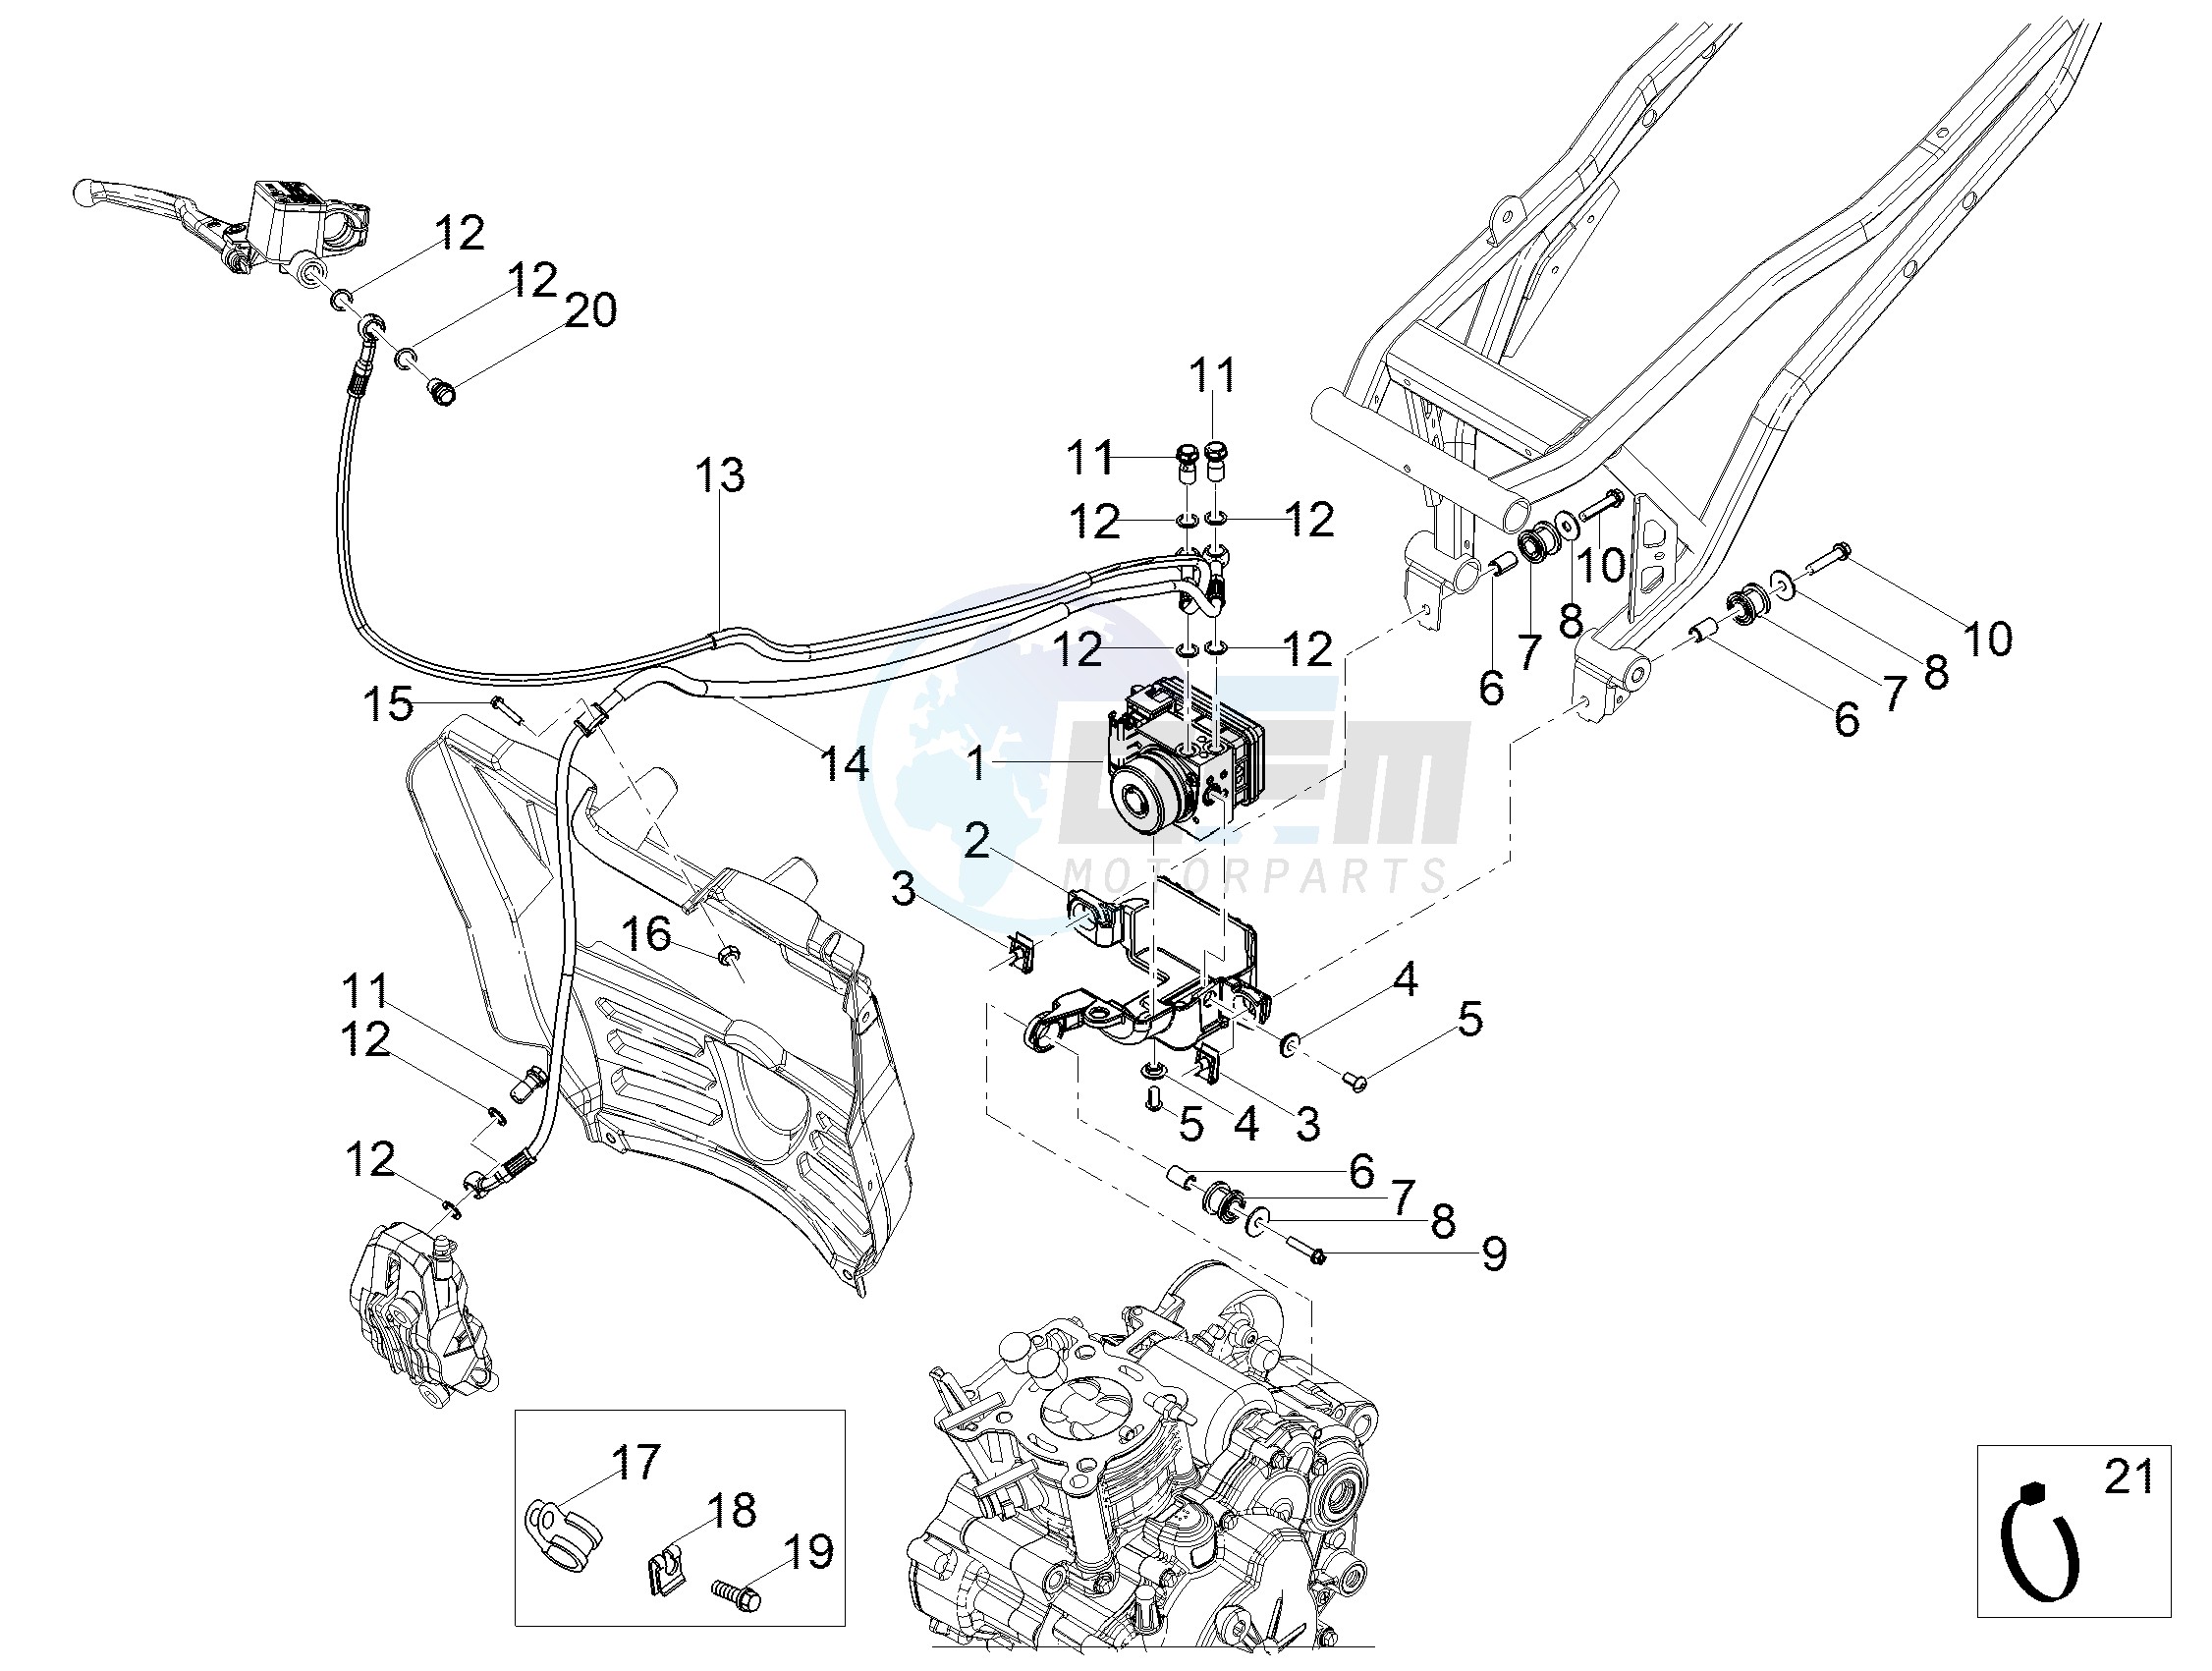 ABS Brake system blueprint